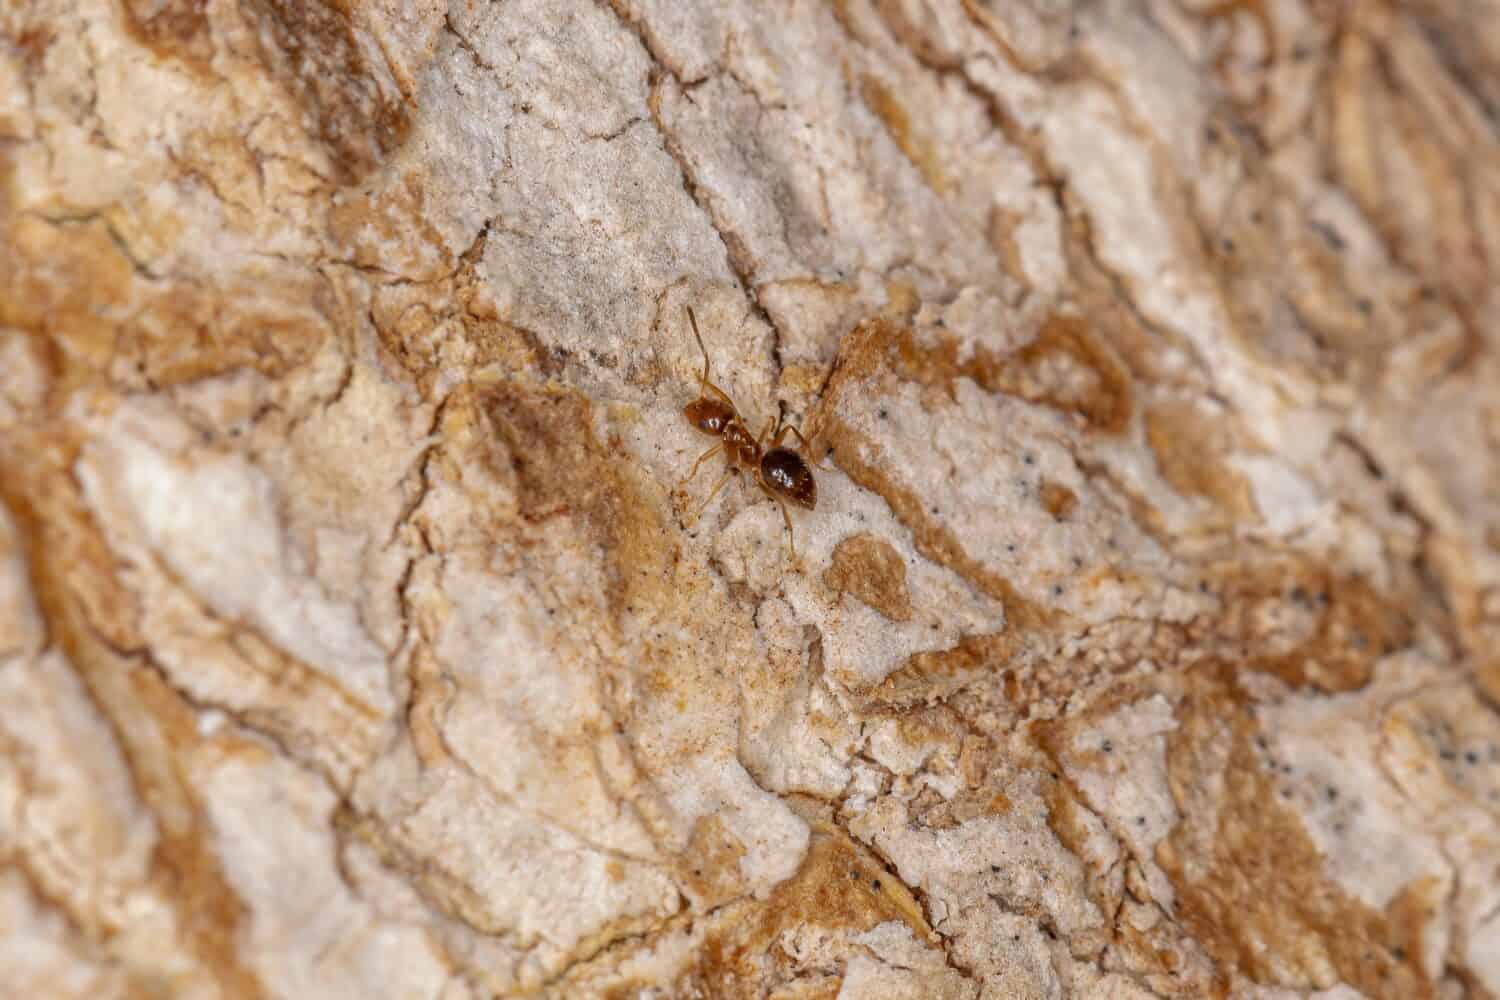 Small Adult Rover Ant of the Genus Brachymyrmex